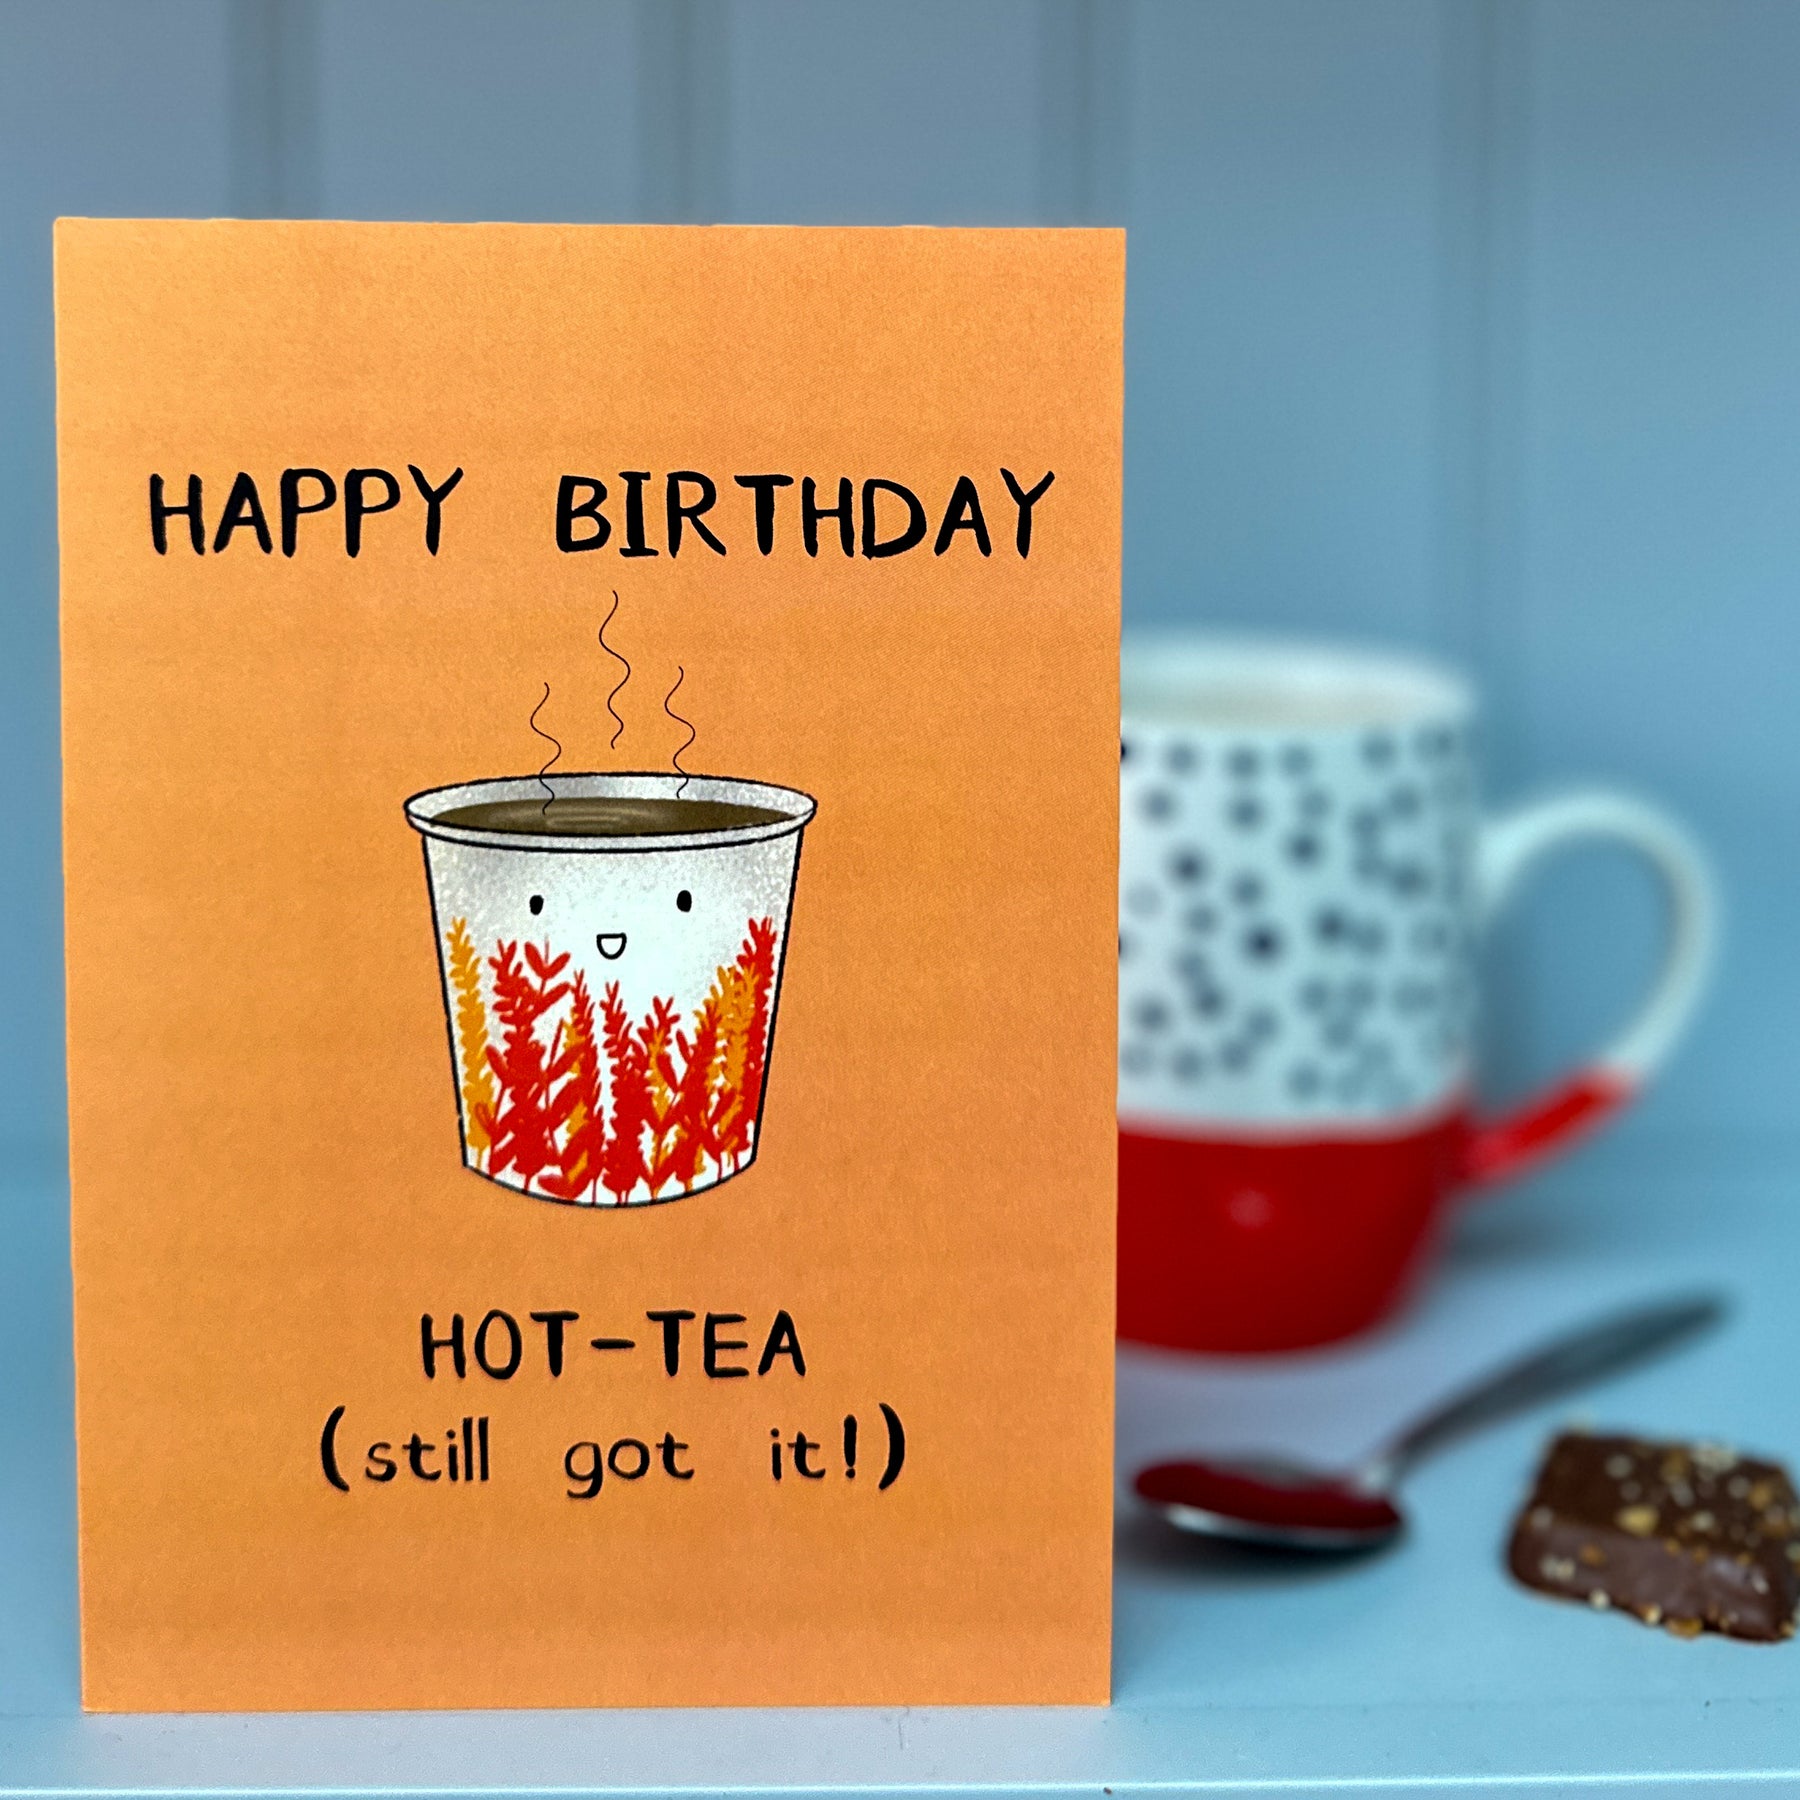 GREETING CARD: Happy Birthday Hot-Tea